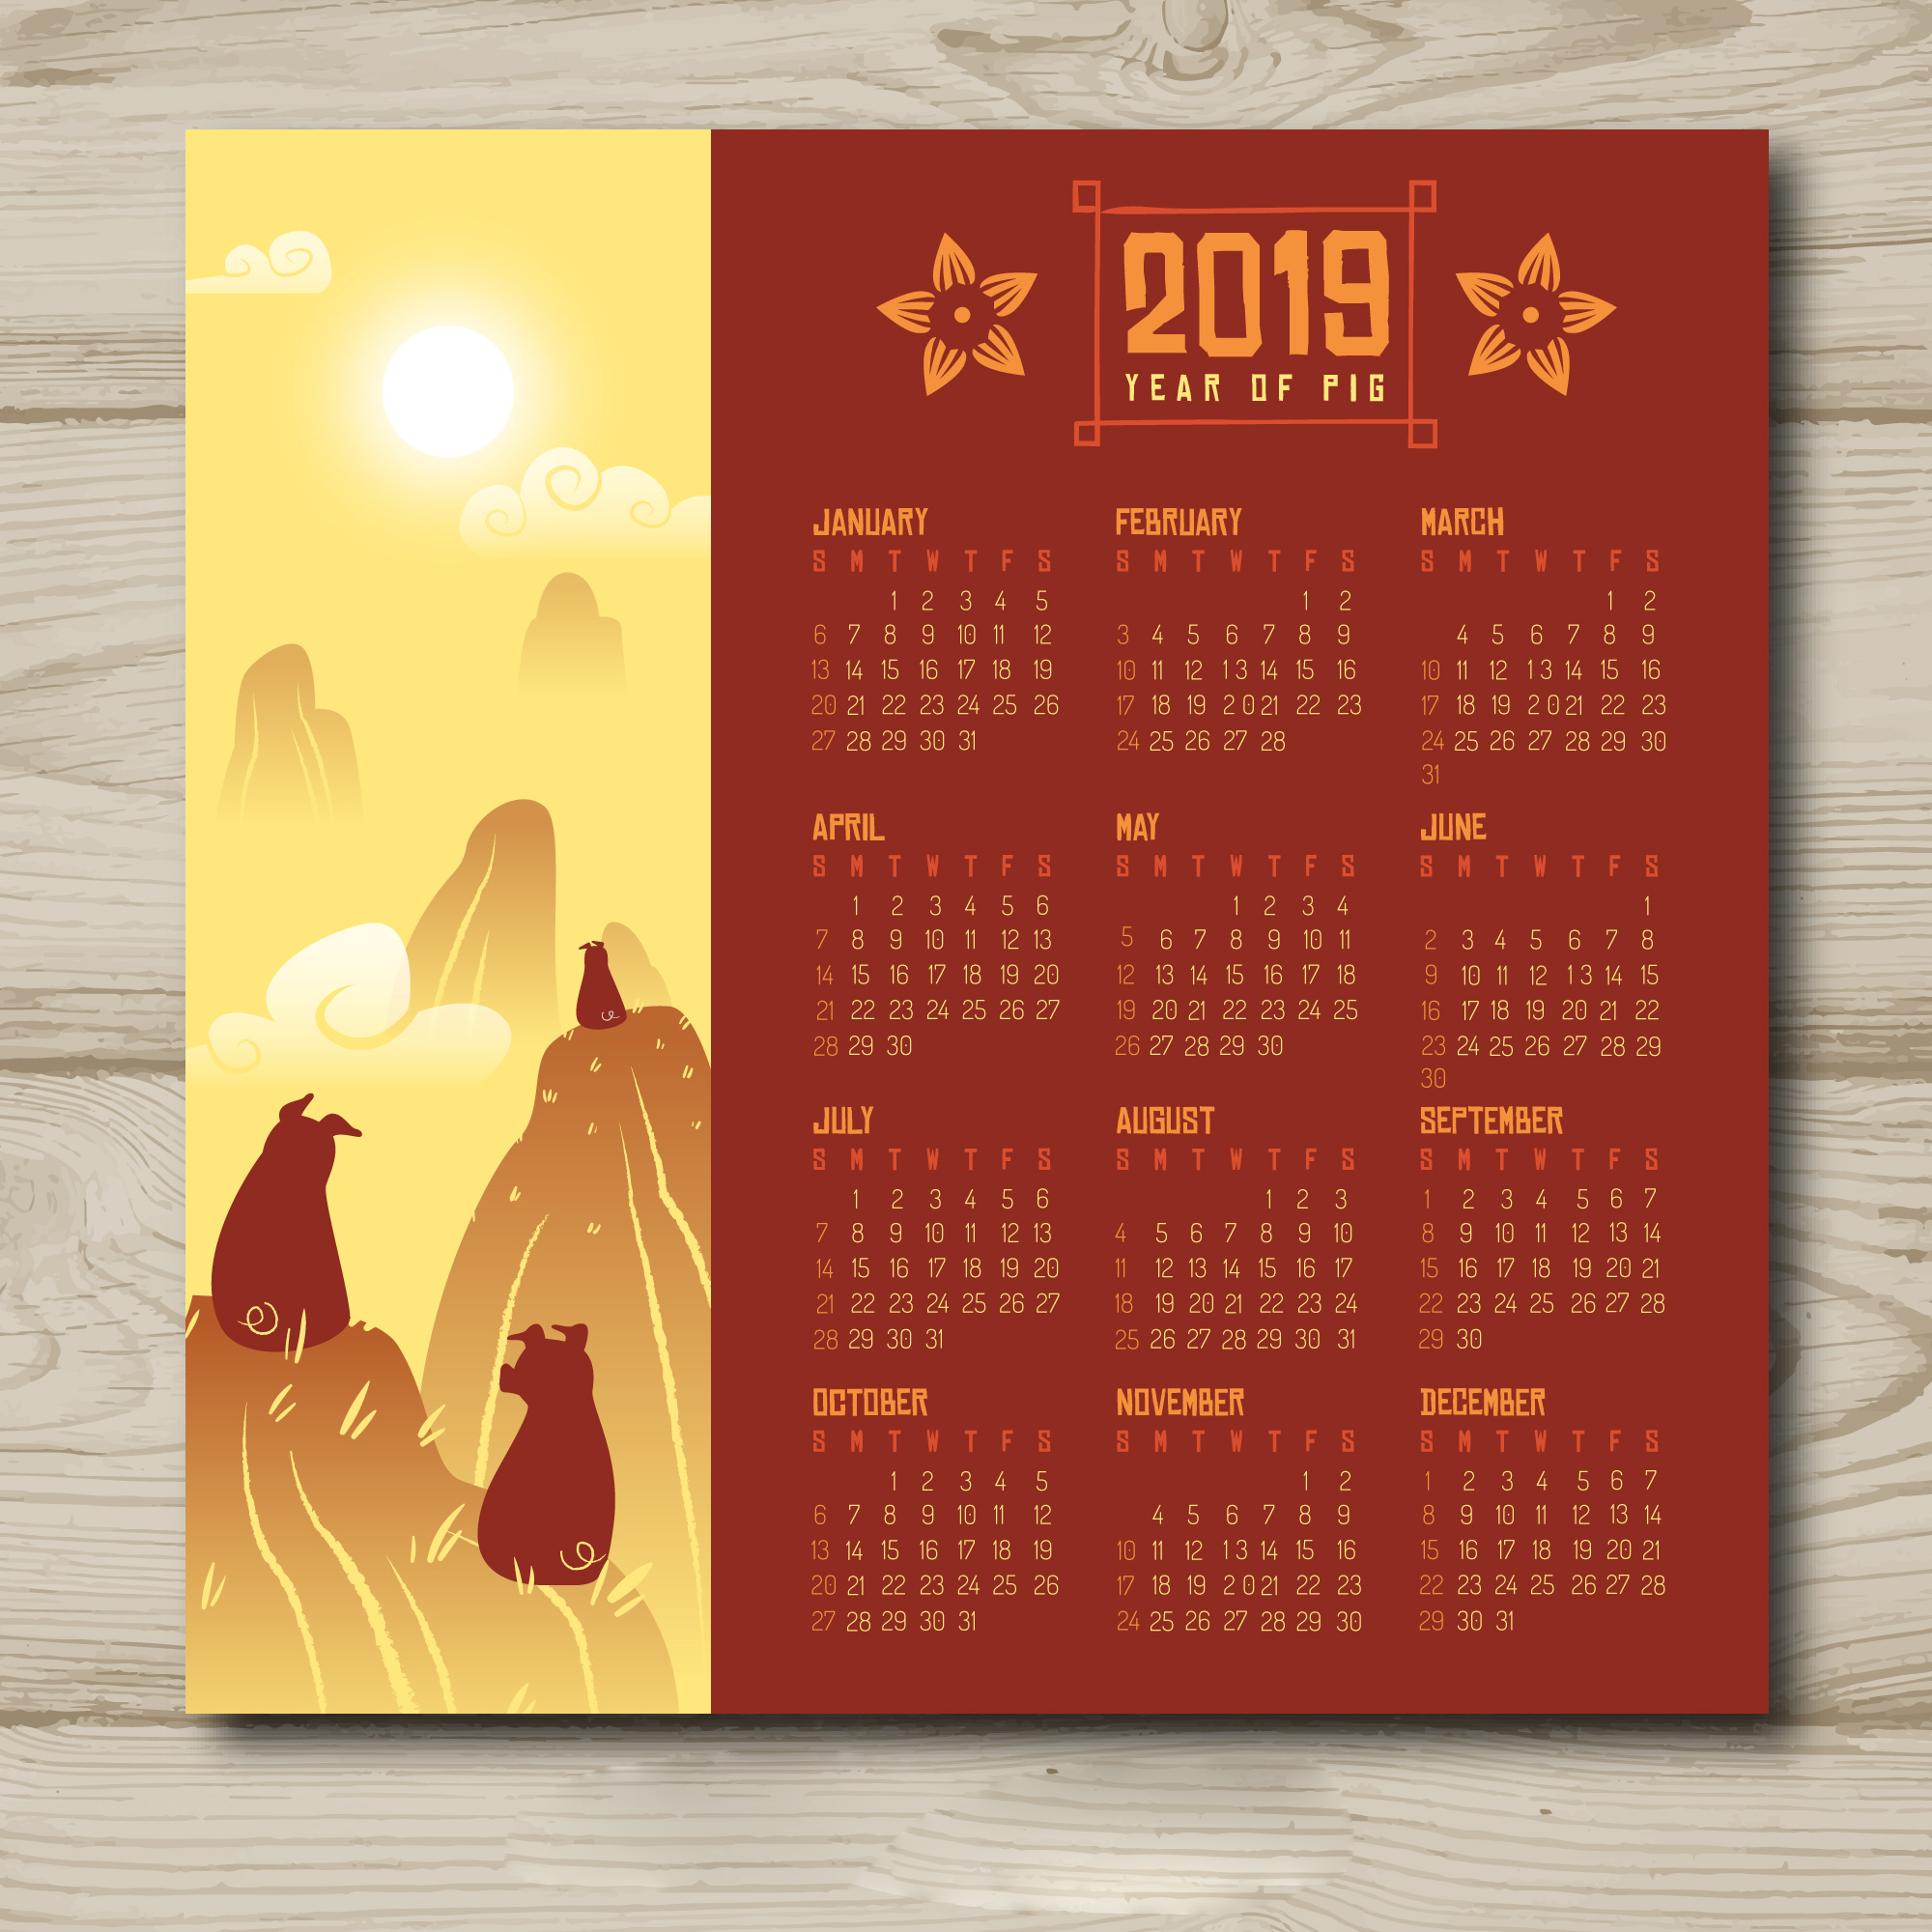 时尚简约的2019新年挂历日历矢量素材模板 Stylish Minimalist 2019 New Year Calendar Calendar Vector Material Template插图6